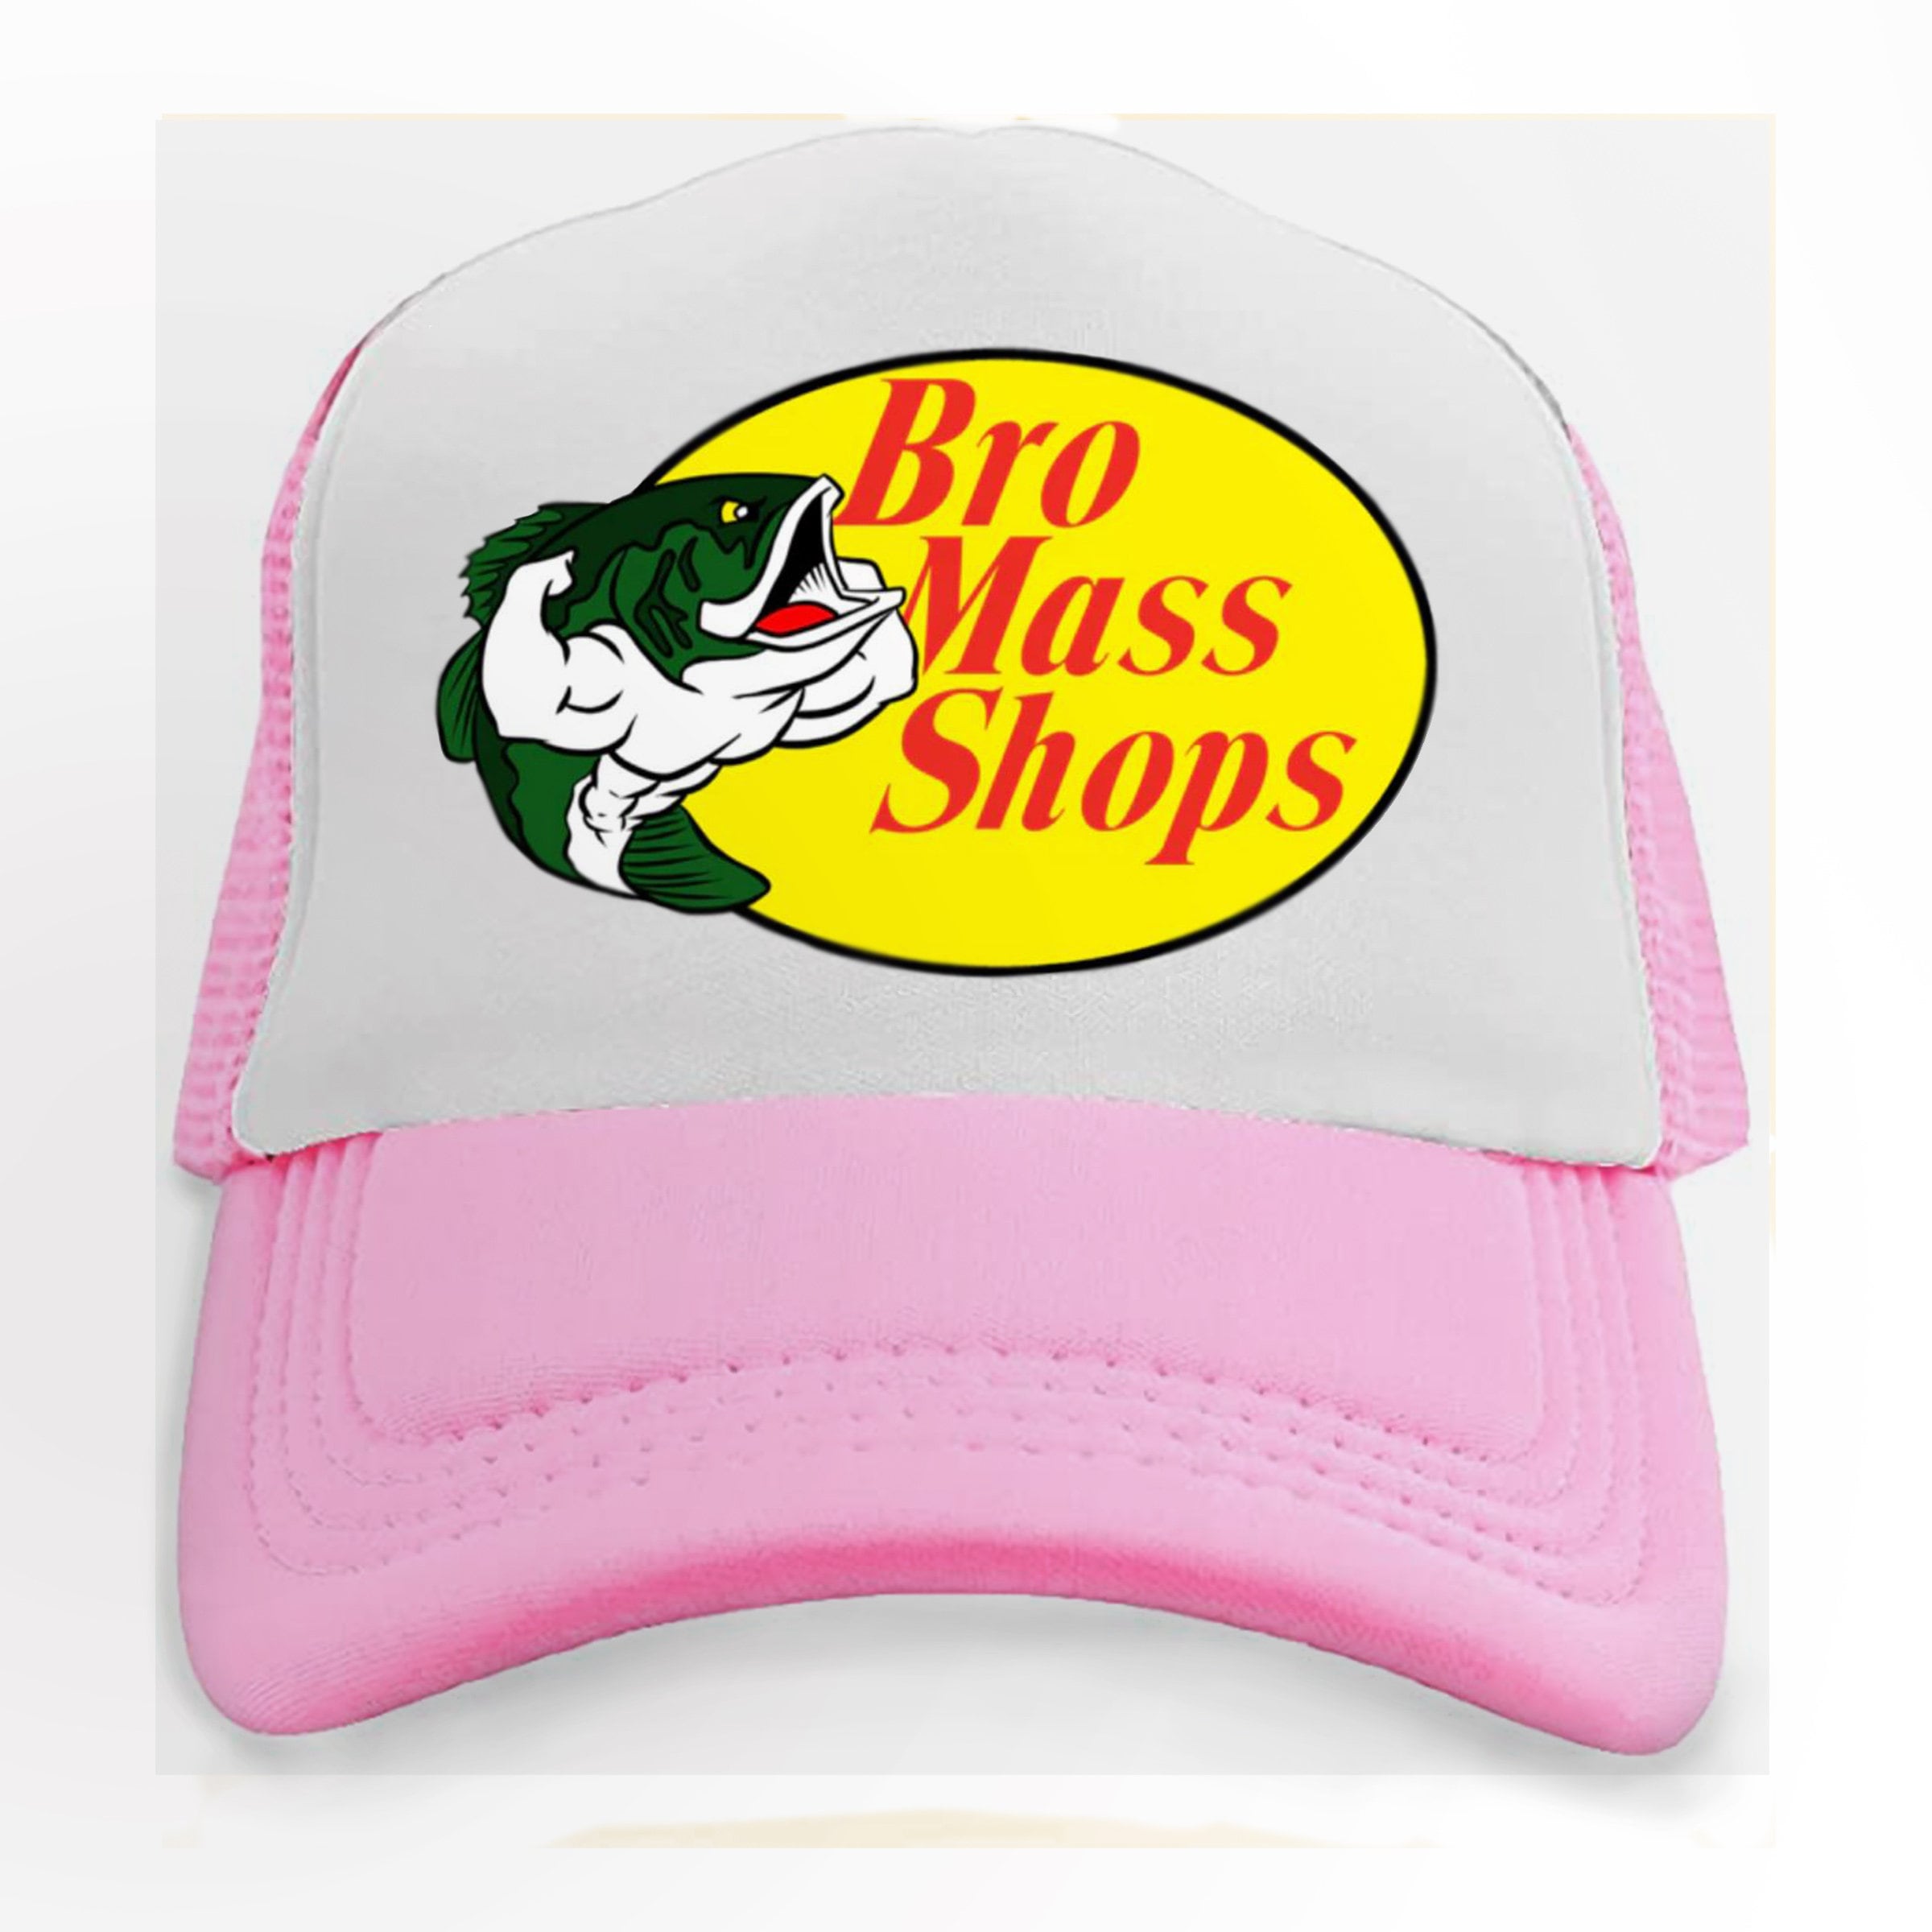 Bro Mass Shop Hat Adjustable Snapback Bass Pro Shop Parody Mesh Hat unisex Trucker Hat